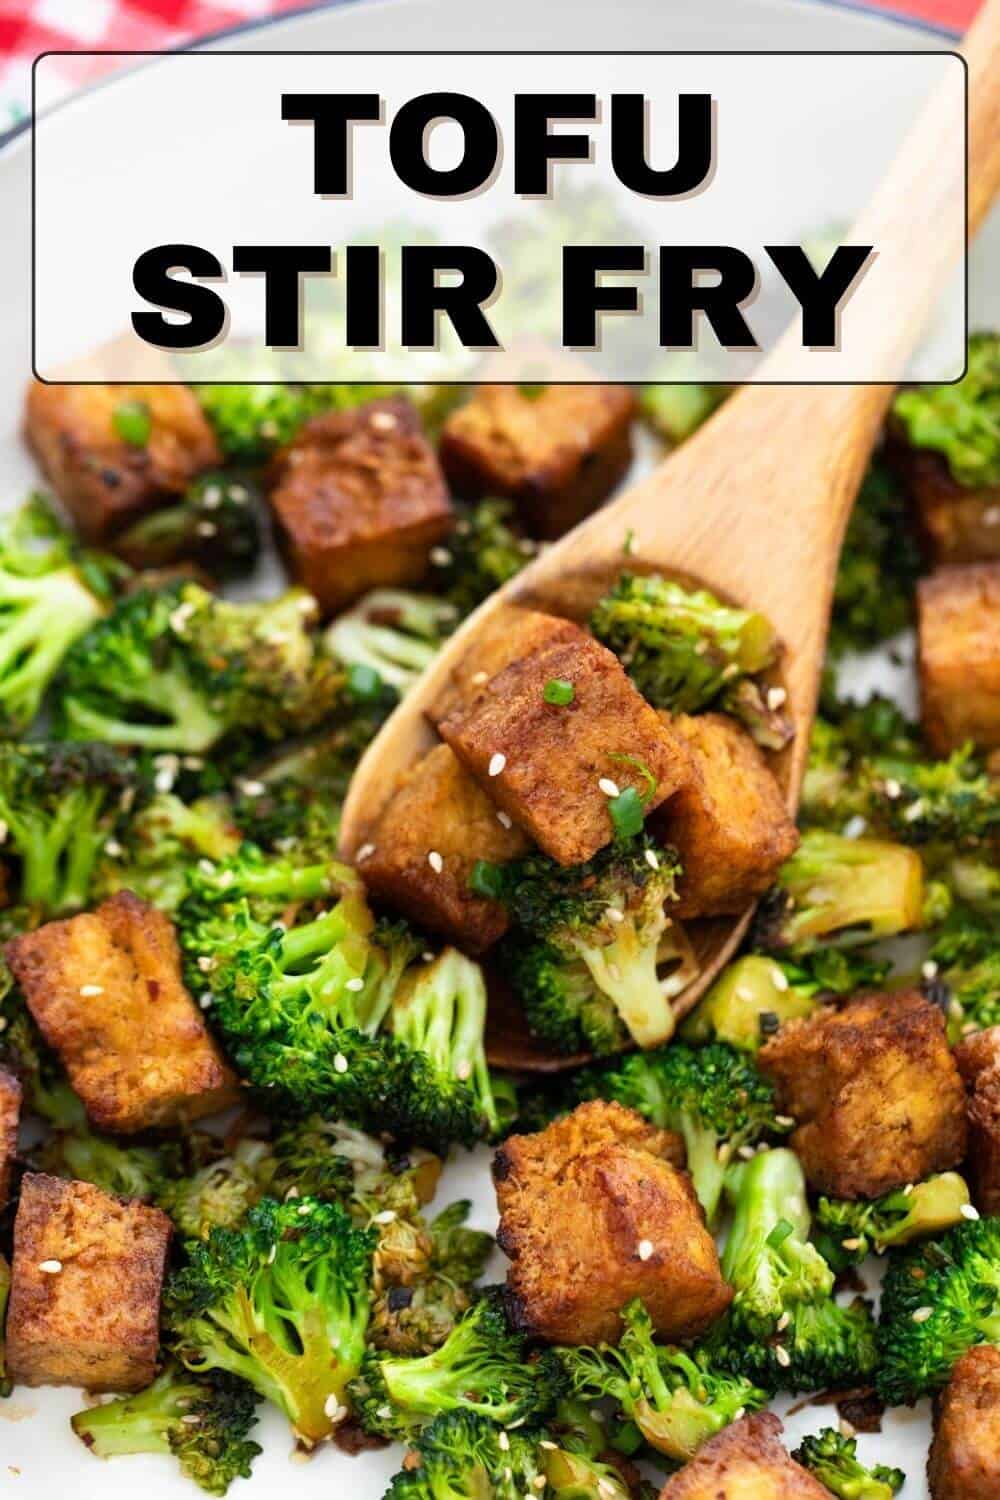 Tofu stir fry with broccoli on a plate.